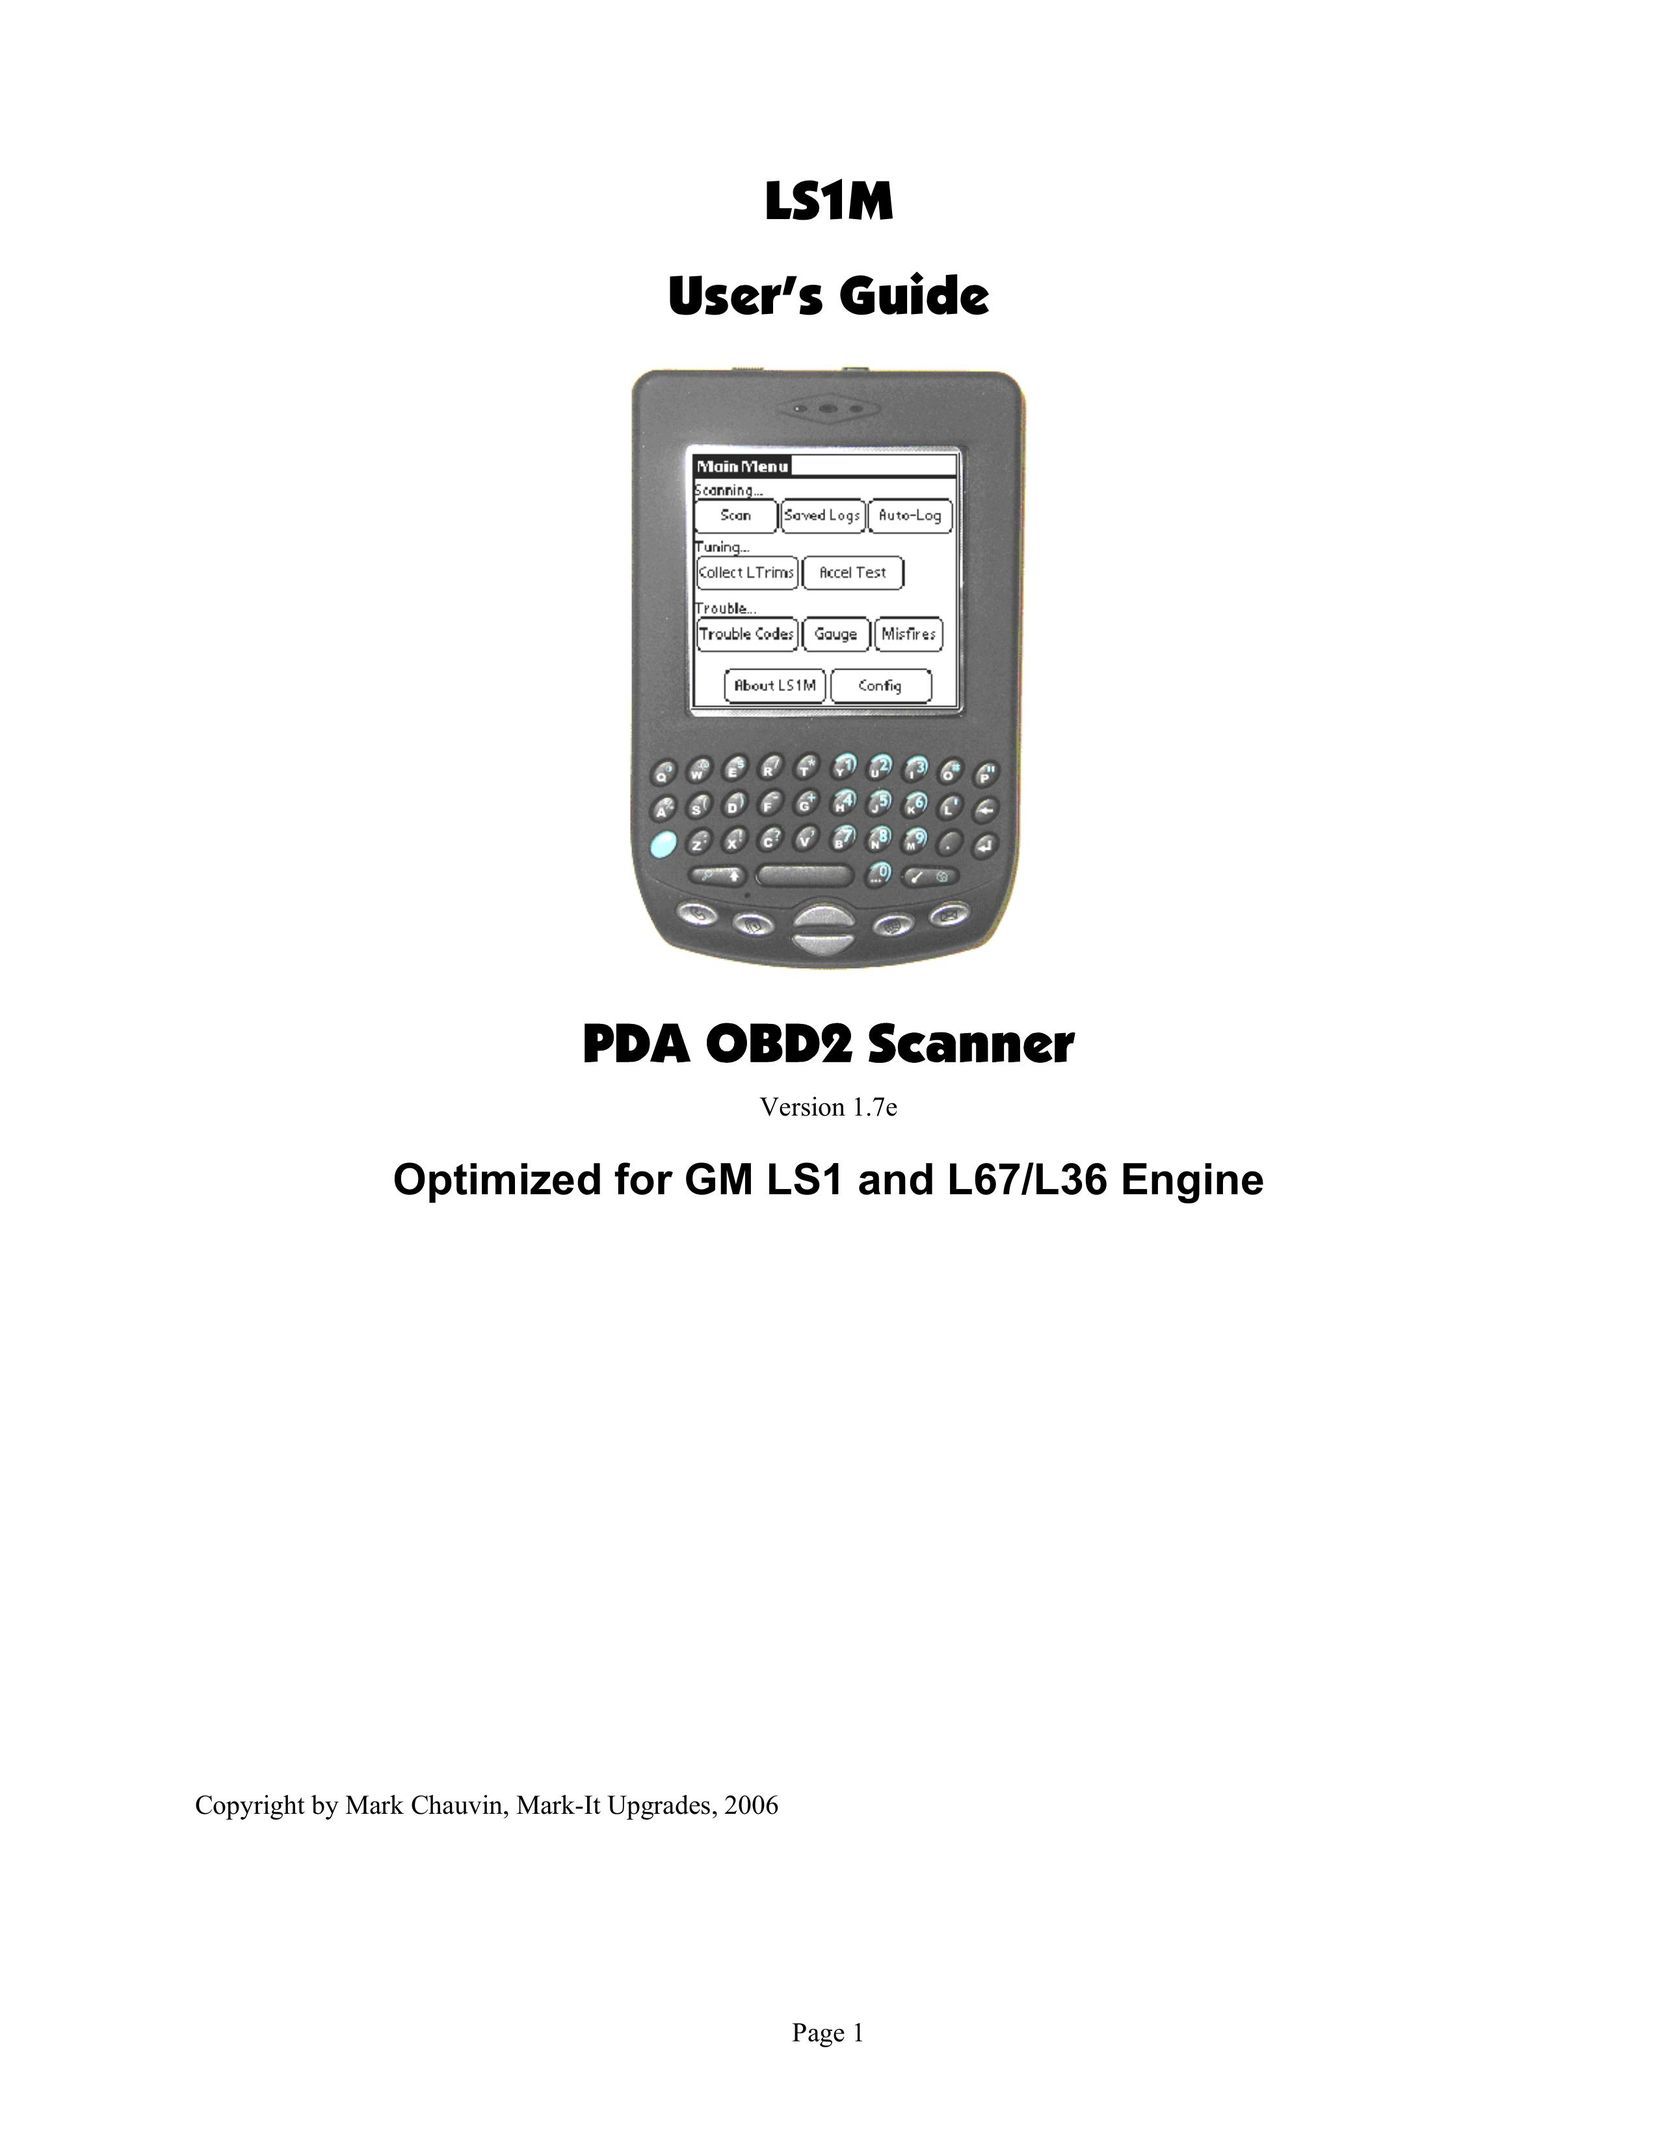 Associated Equipment GM L36 Scanner User Manual